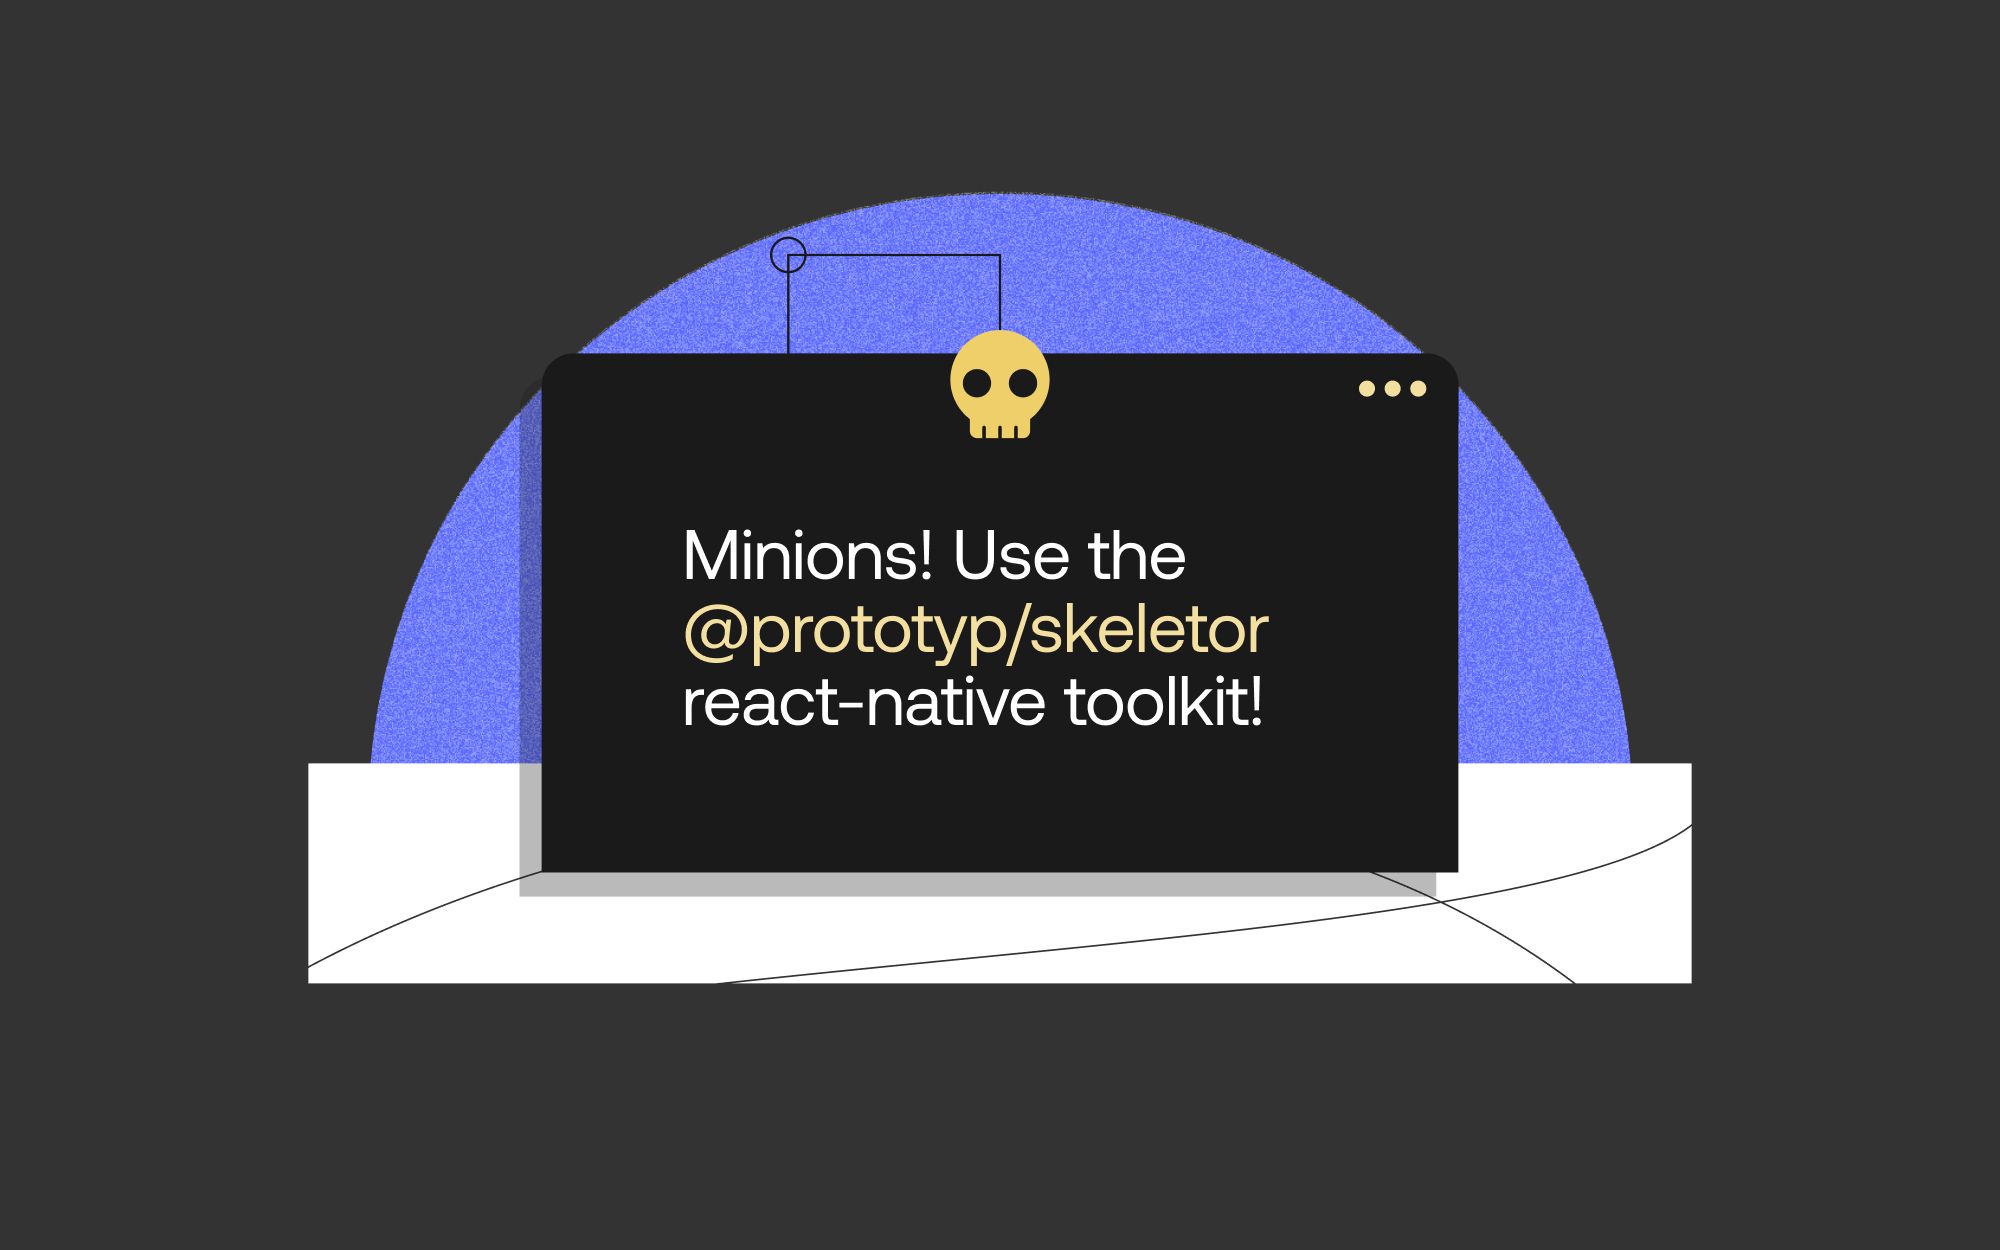 Minions! Use the @prototyp/skeletor react-native toolkit!